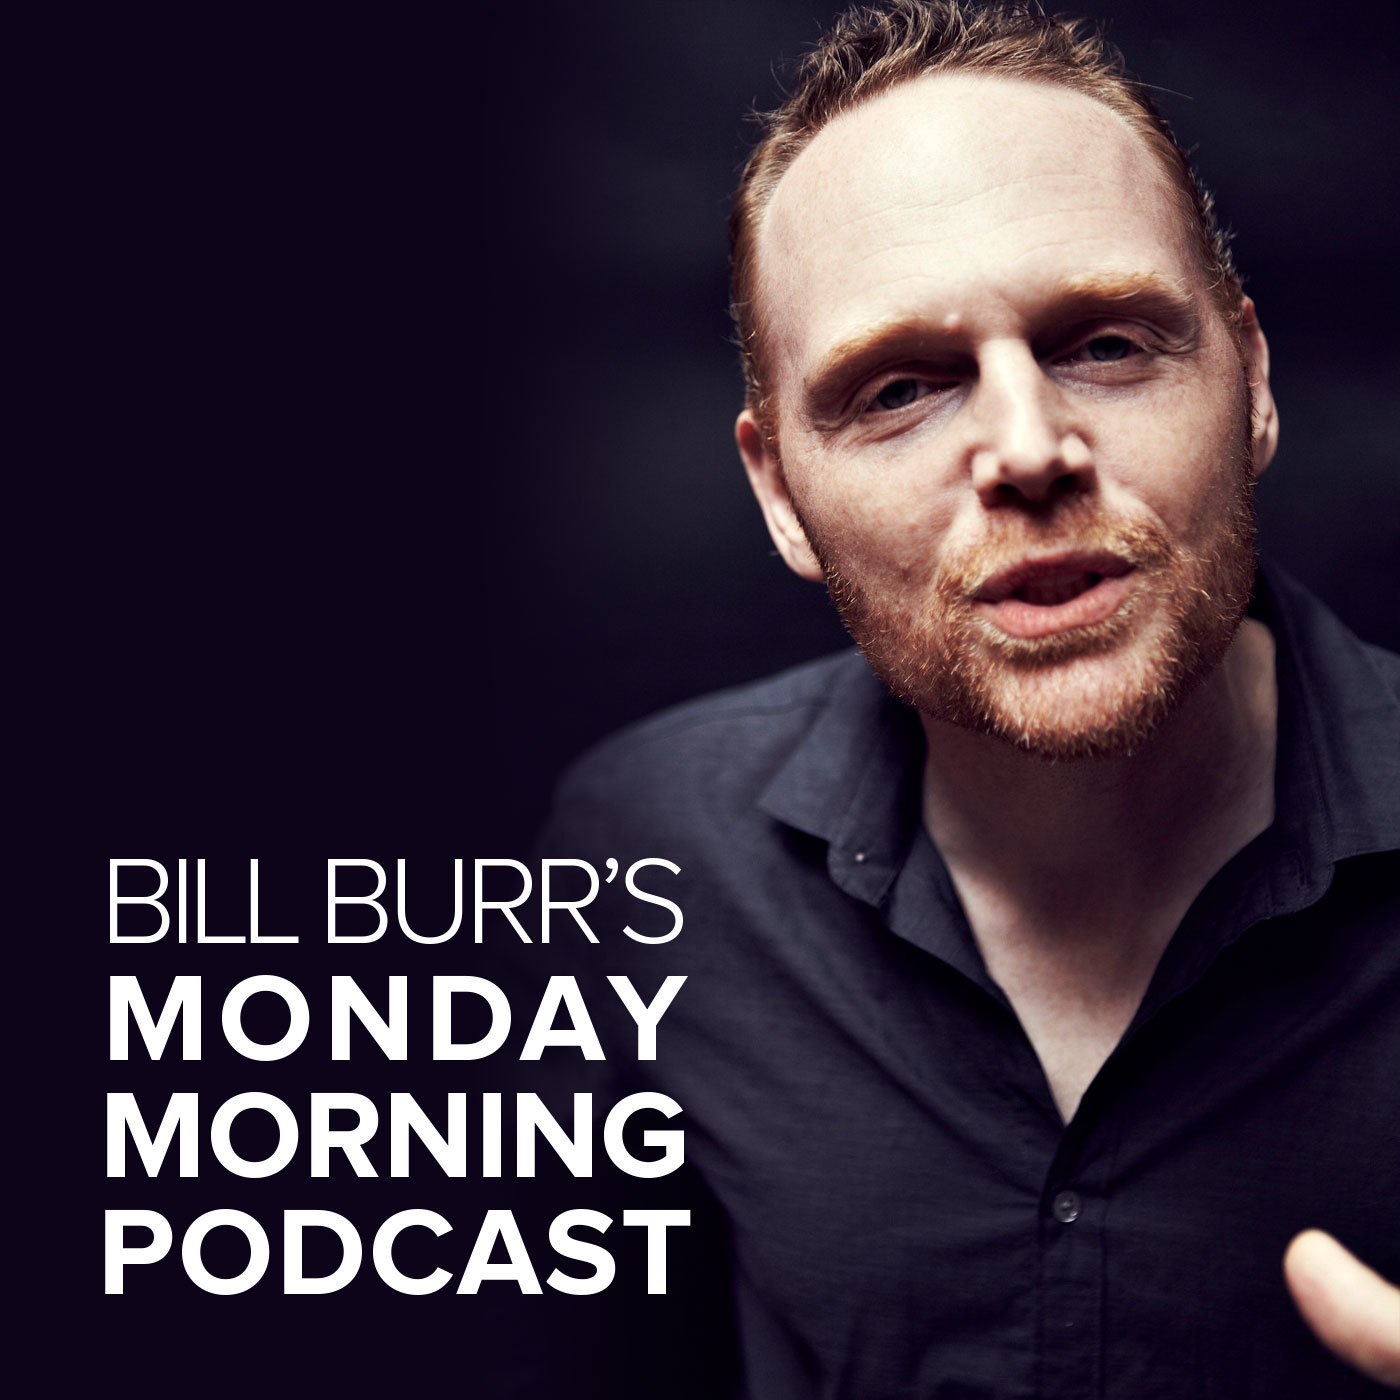 Monday Morning Podcast 9-21-15